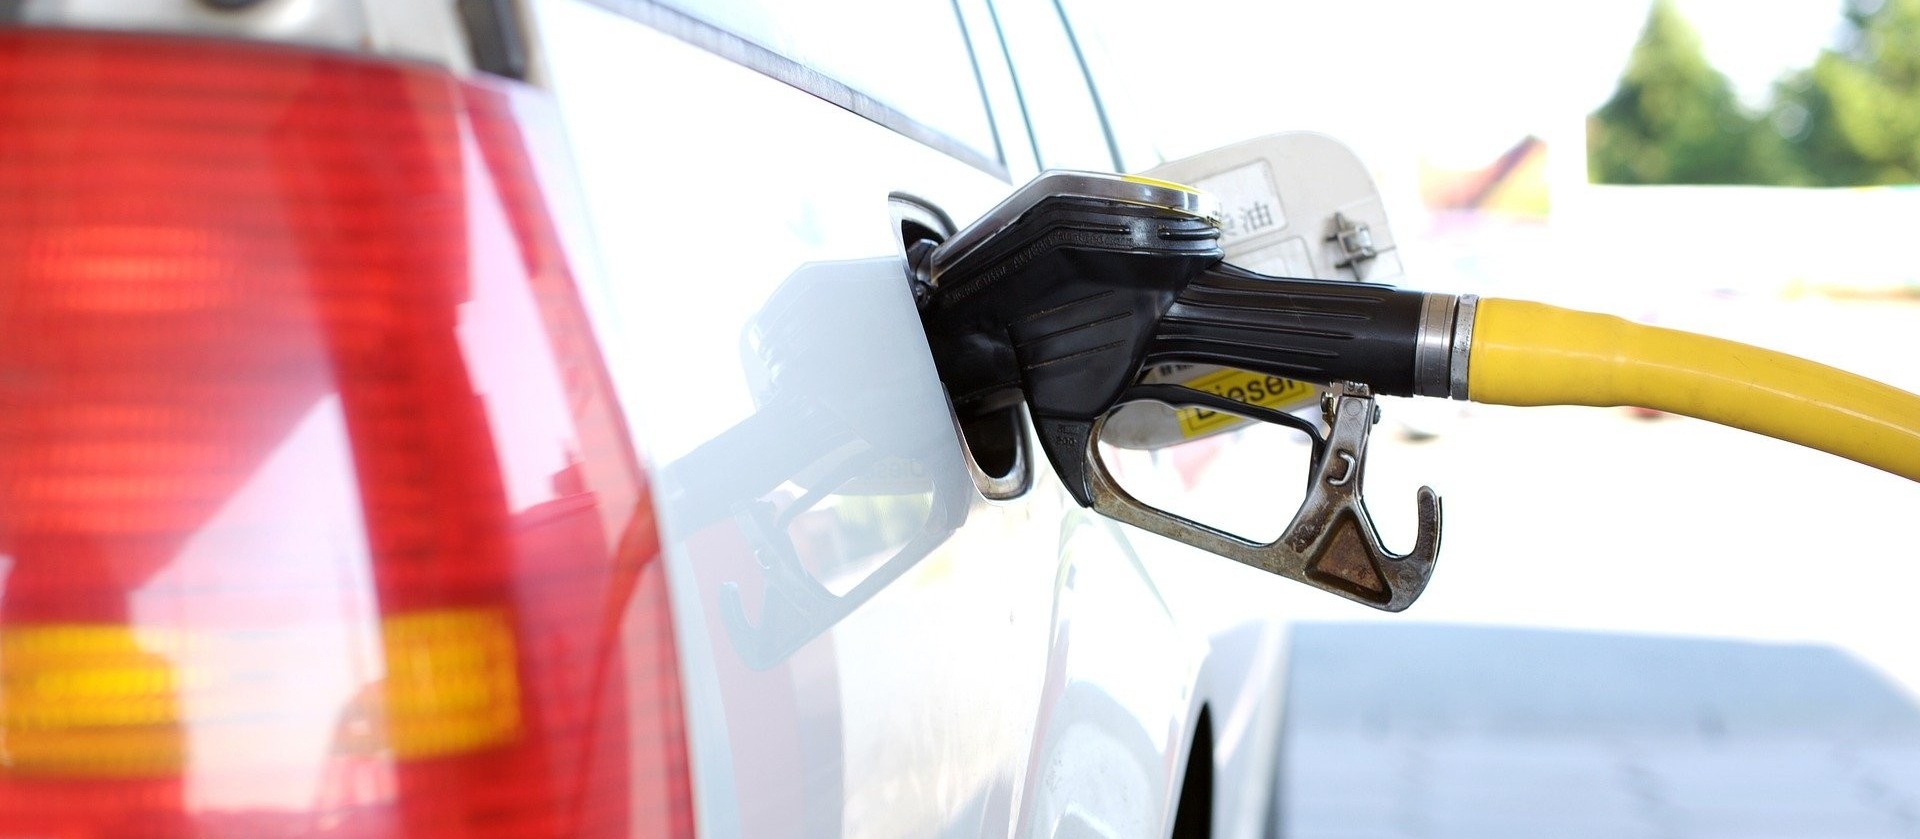 Procon-PR vai notificar postos e distribuidoras por reajuste antecipado nos combustíveis